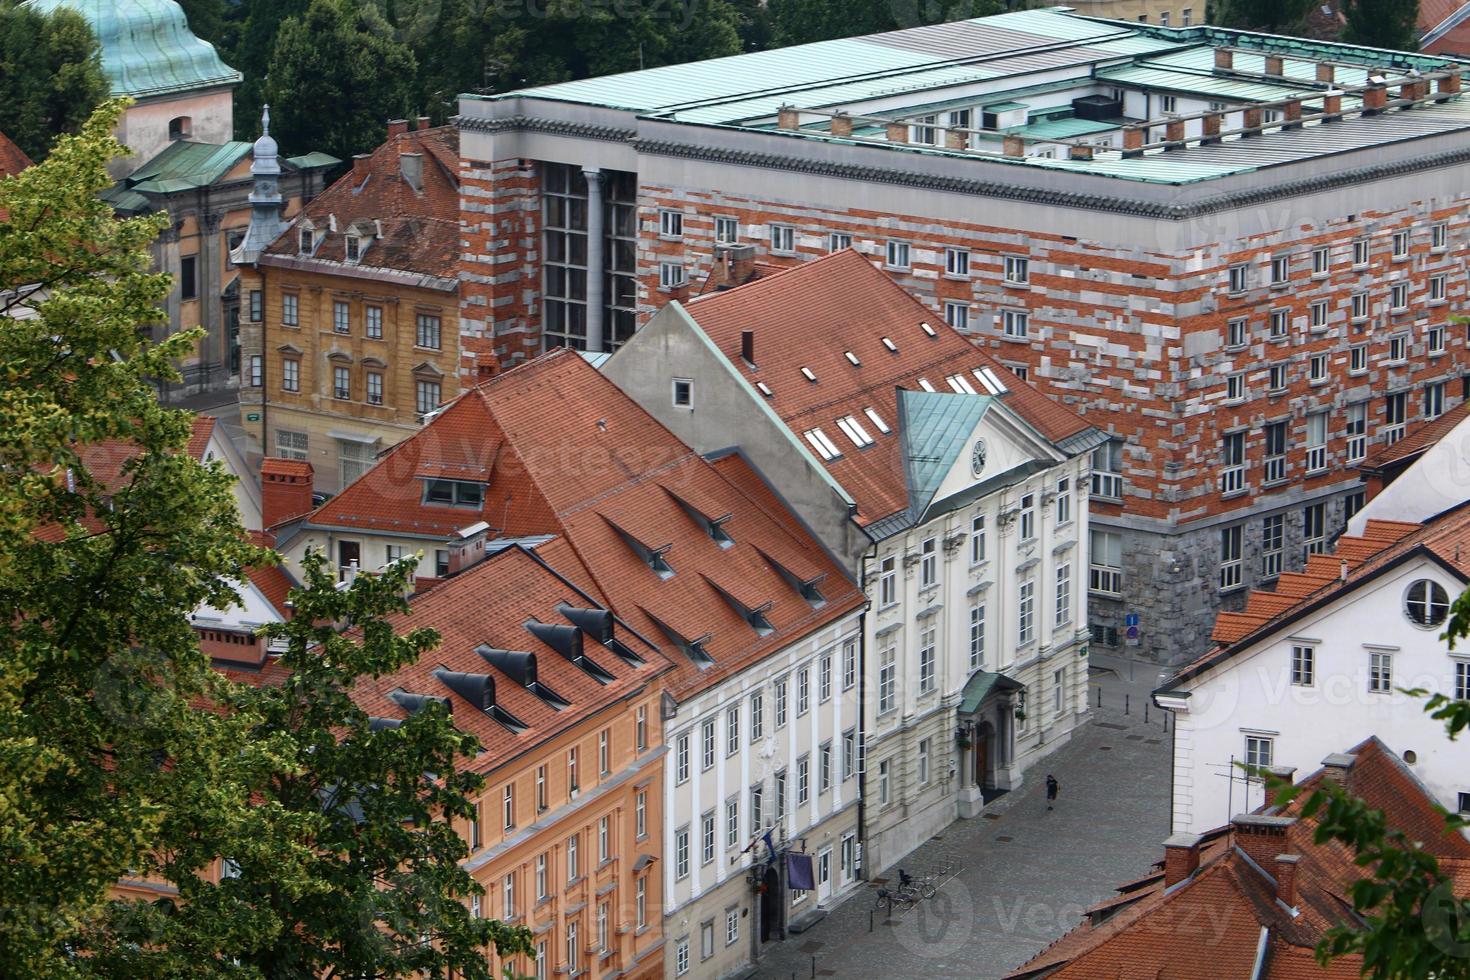 Tiled roofs of the city of Ljubljana the capital of Slovenia. photo